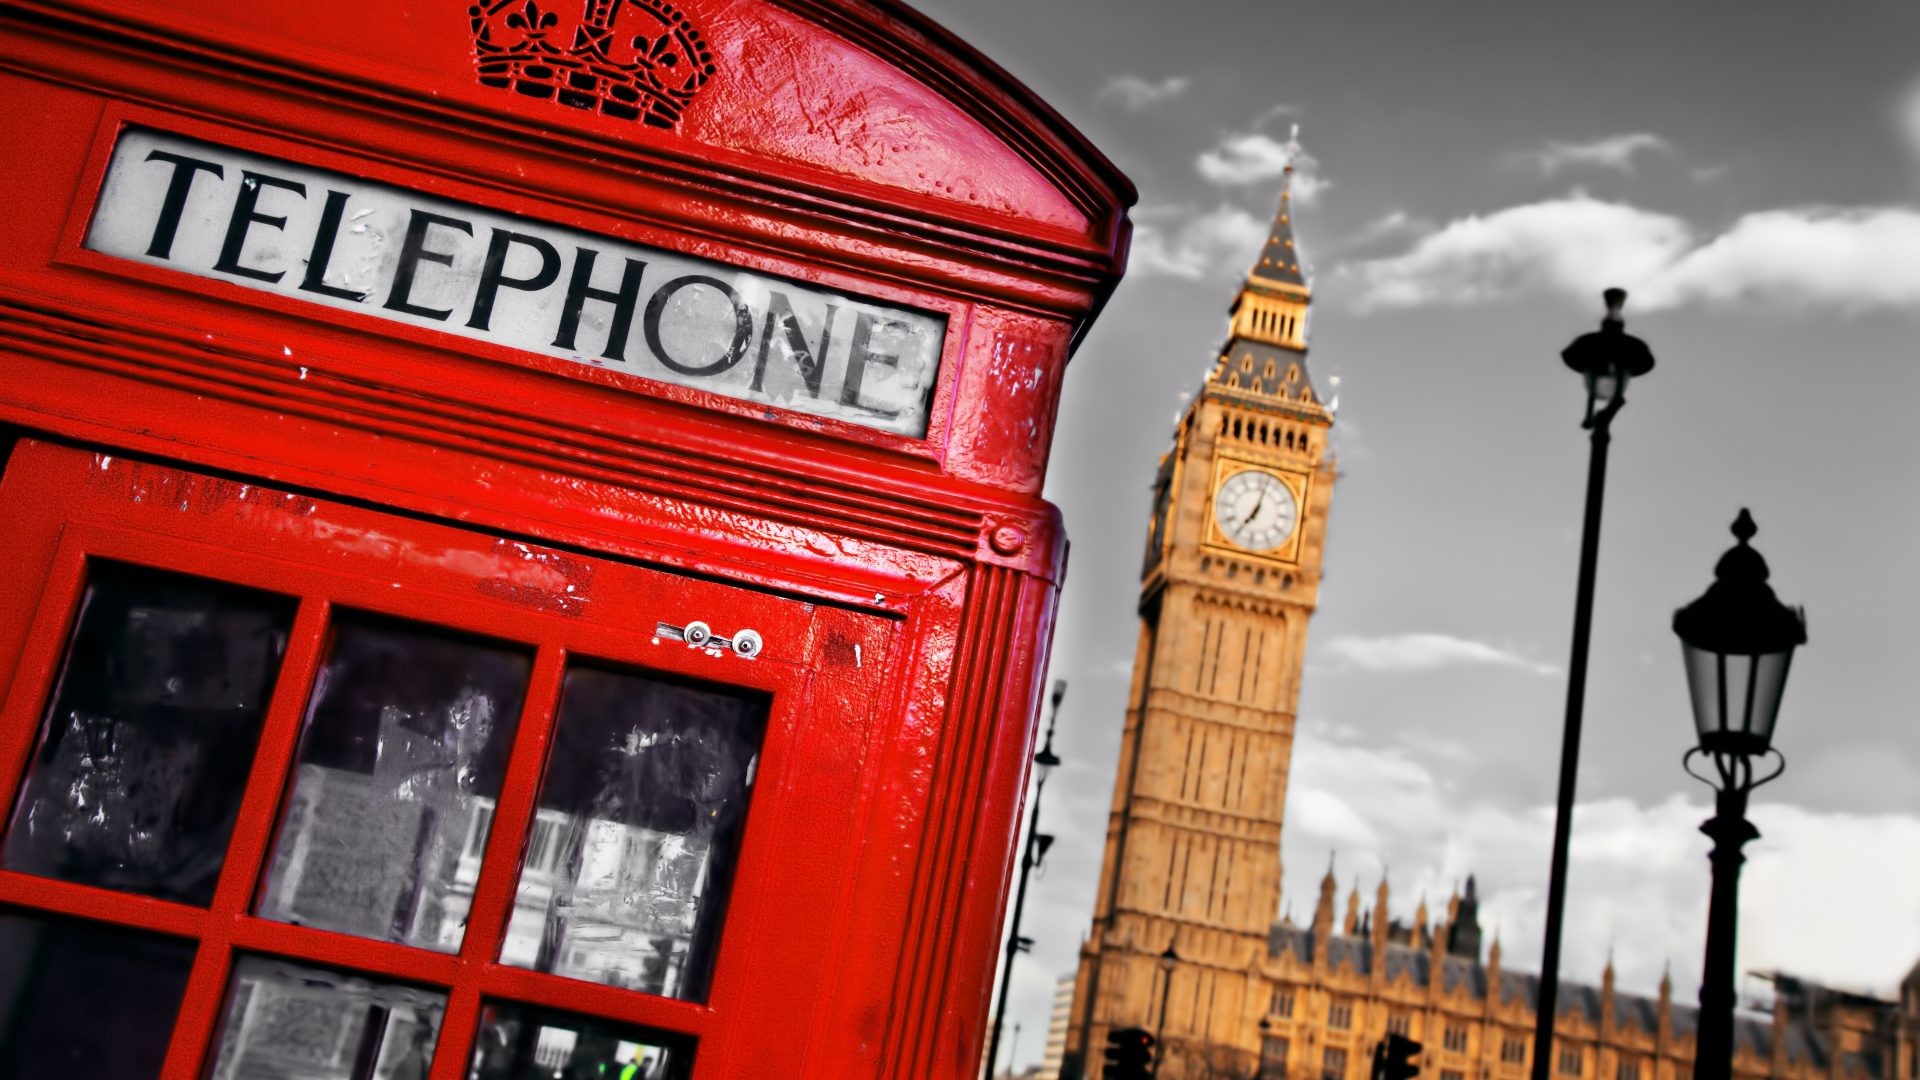 British Flag Wallpaper 54 Images - London Phone Booth Big Ben - HD Wallpaper 